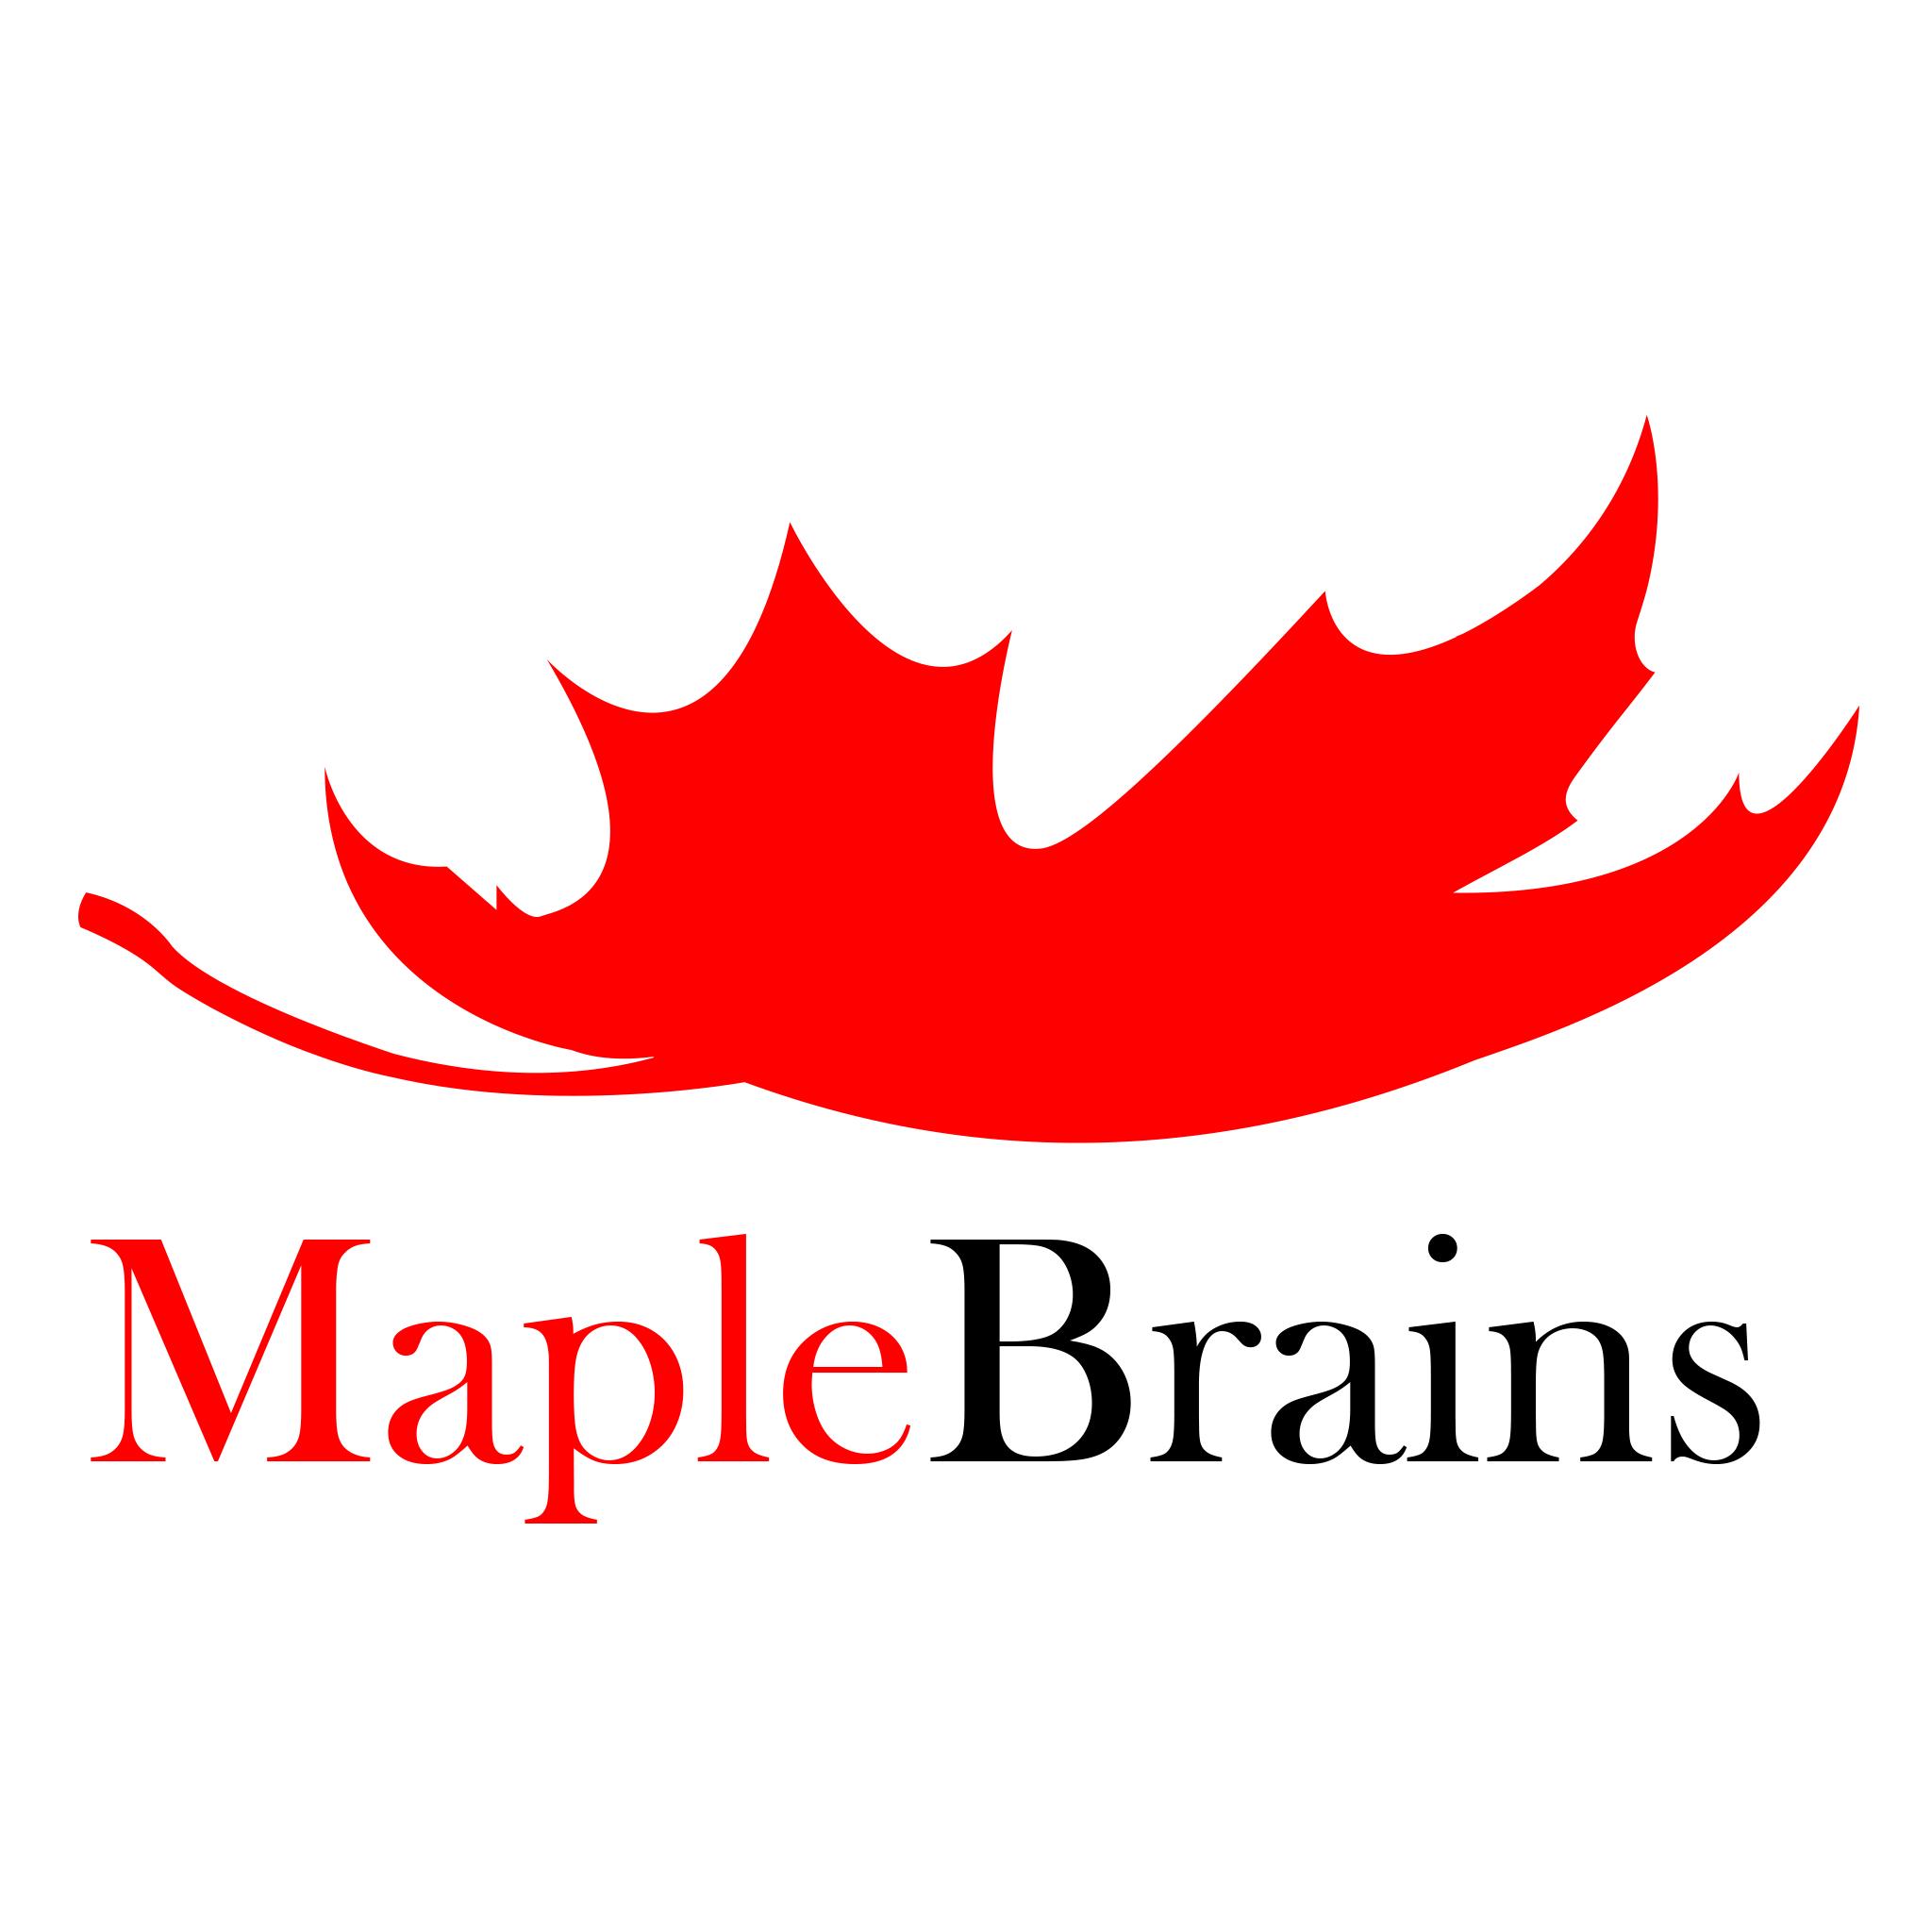 Maplebrains Technologies Inc profile on Qualified.One